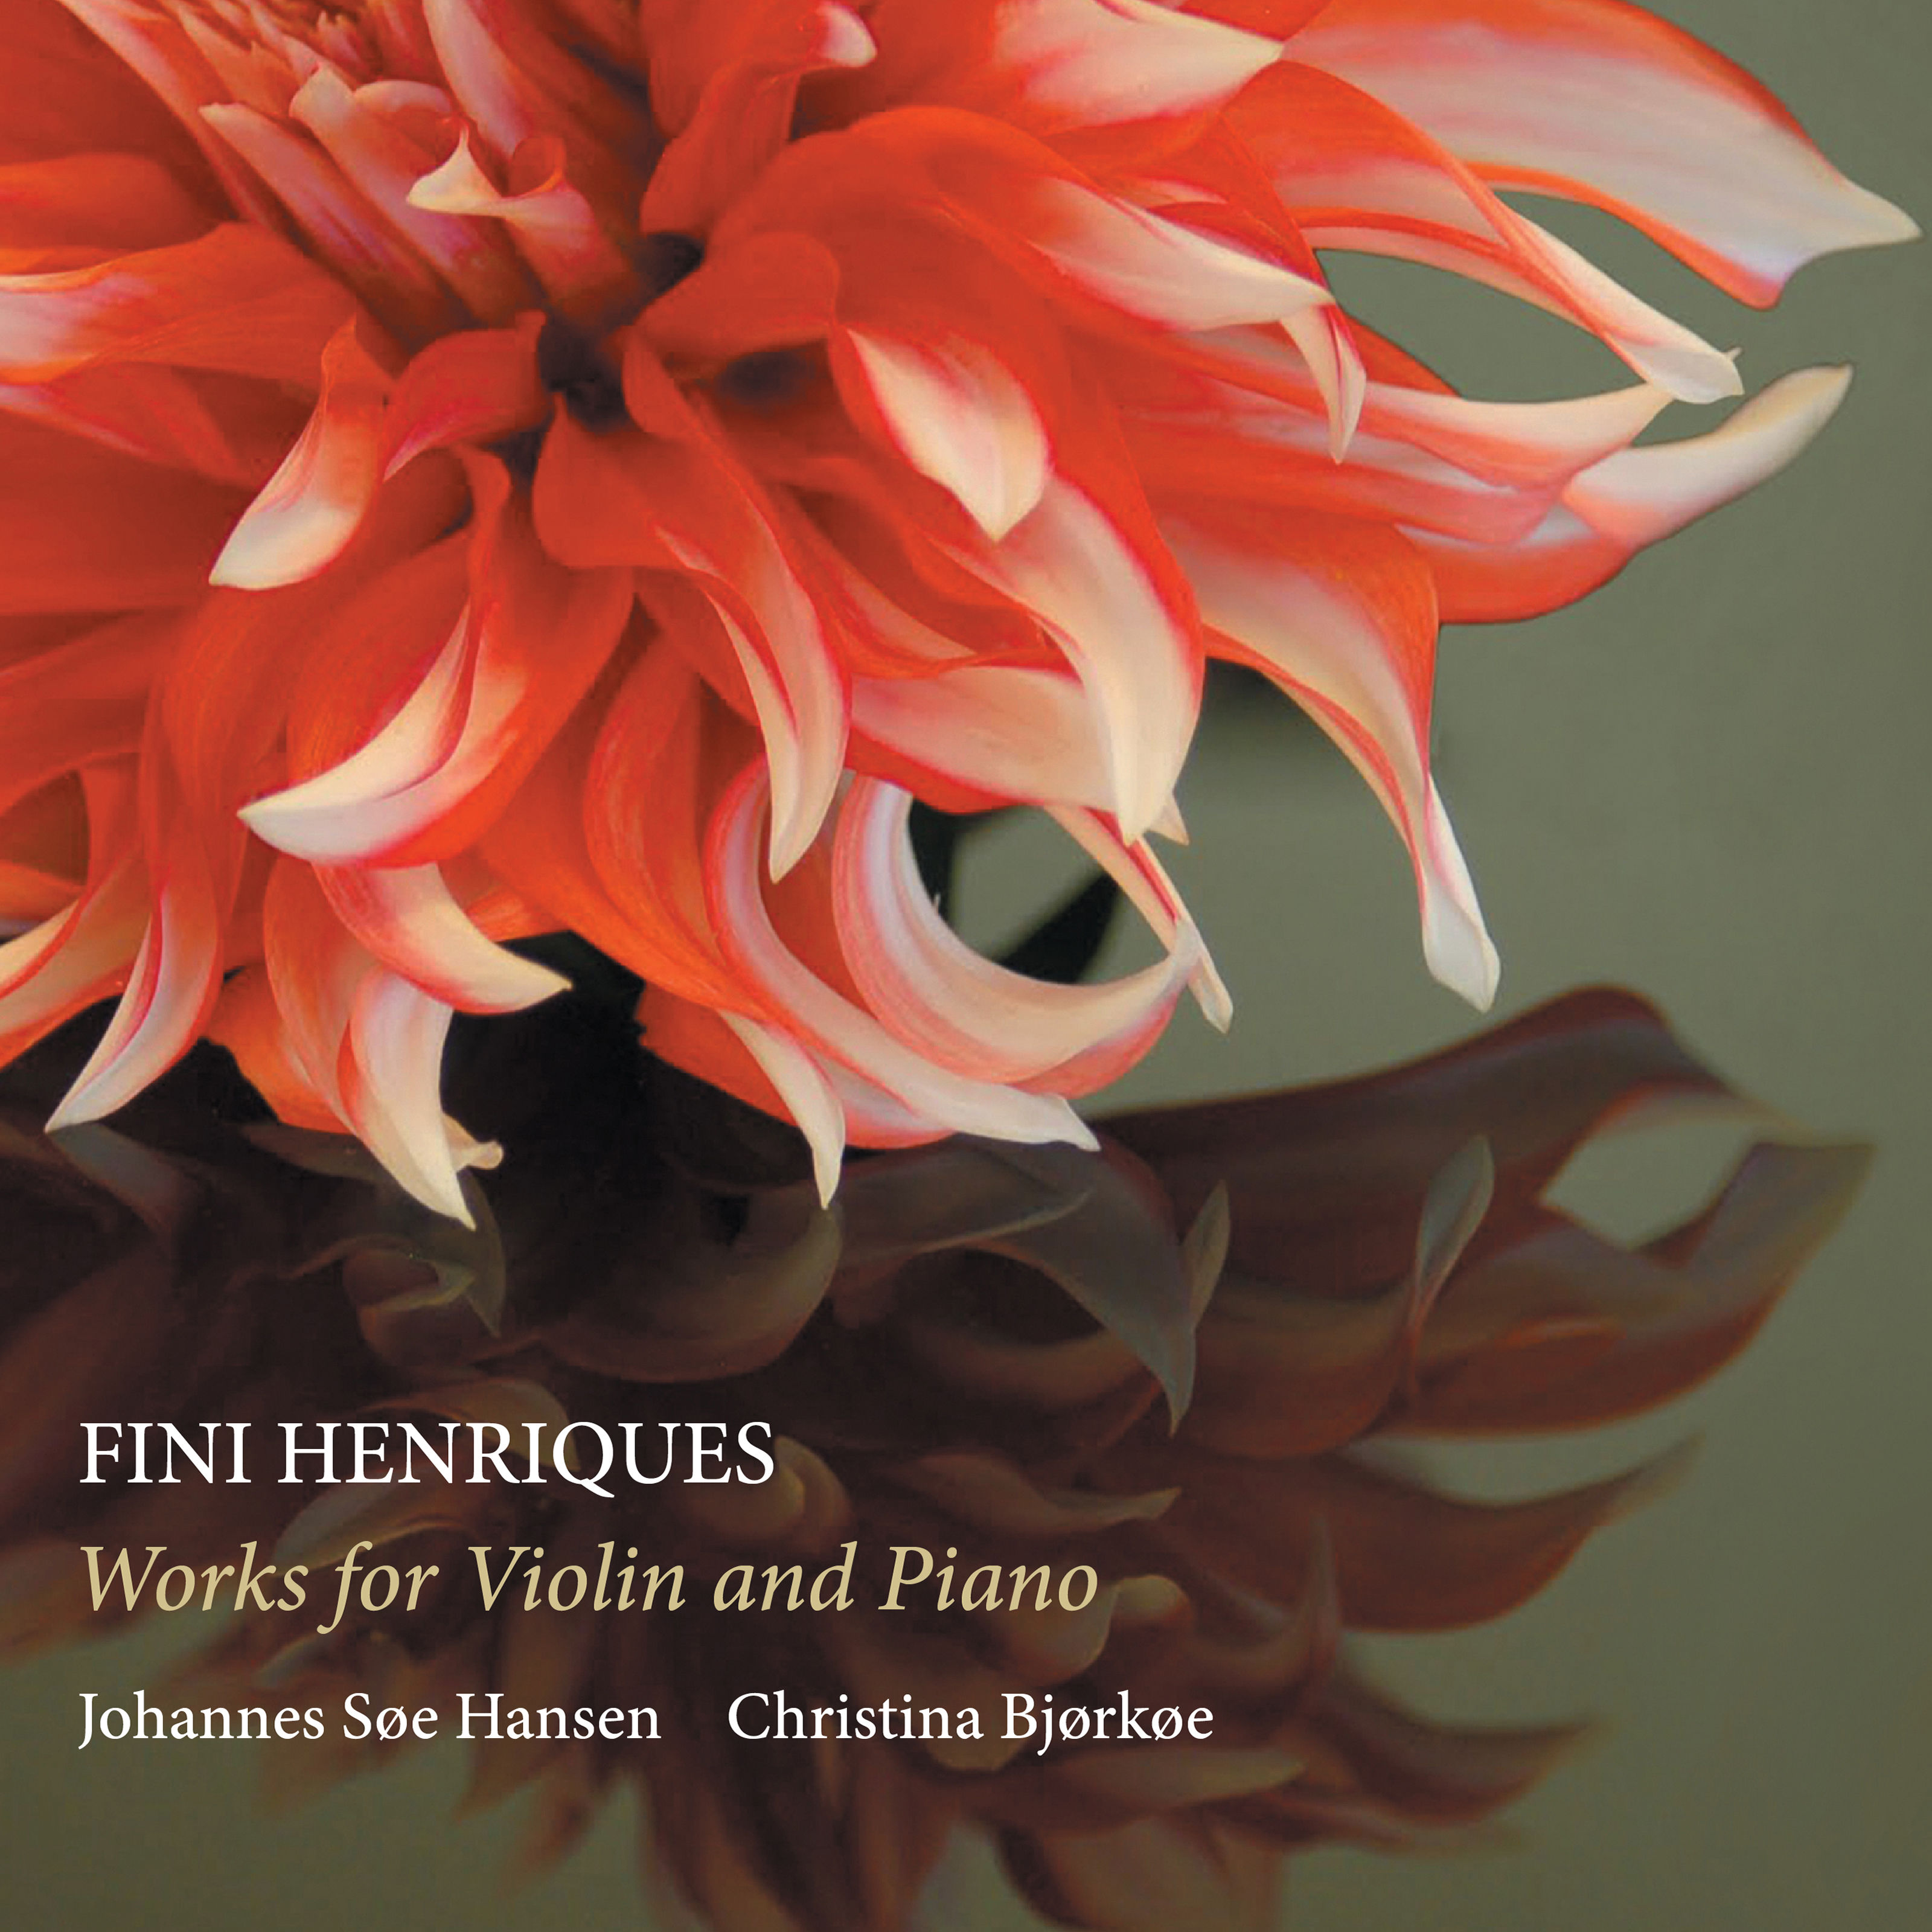 Johannes Soe Hansen & Christina Bjorkoe - Fini Henriques: Works for Violin & Piano (2019) [FLAC 24bit/96kHz]